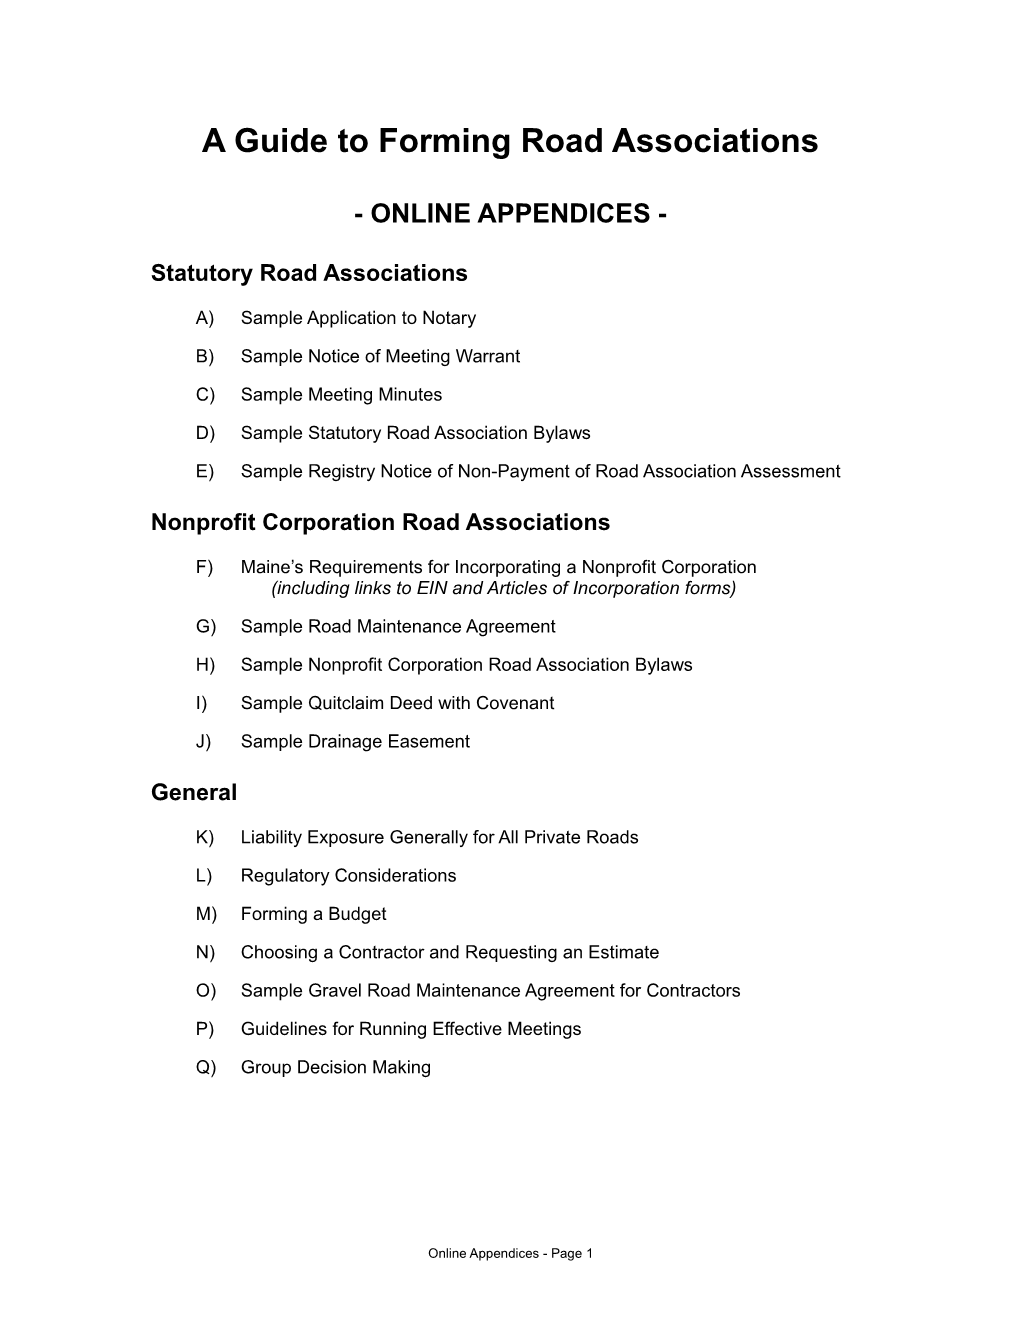 Appendix B: Sample Road Maintenance Agreement